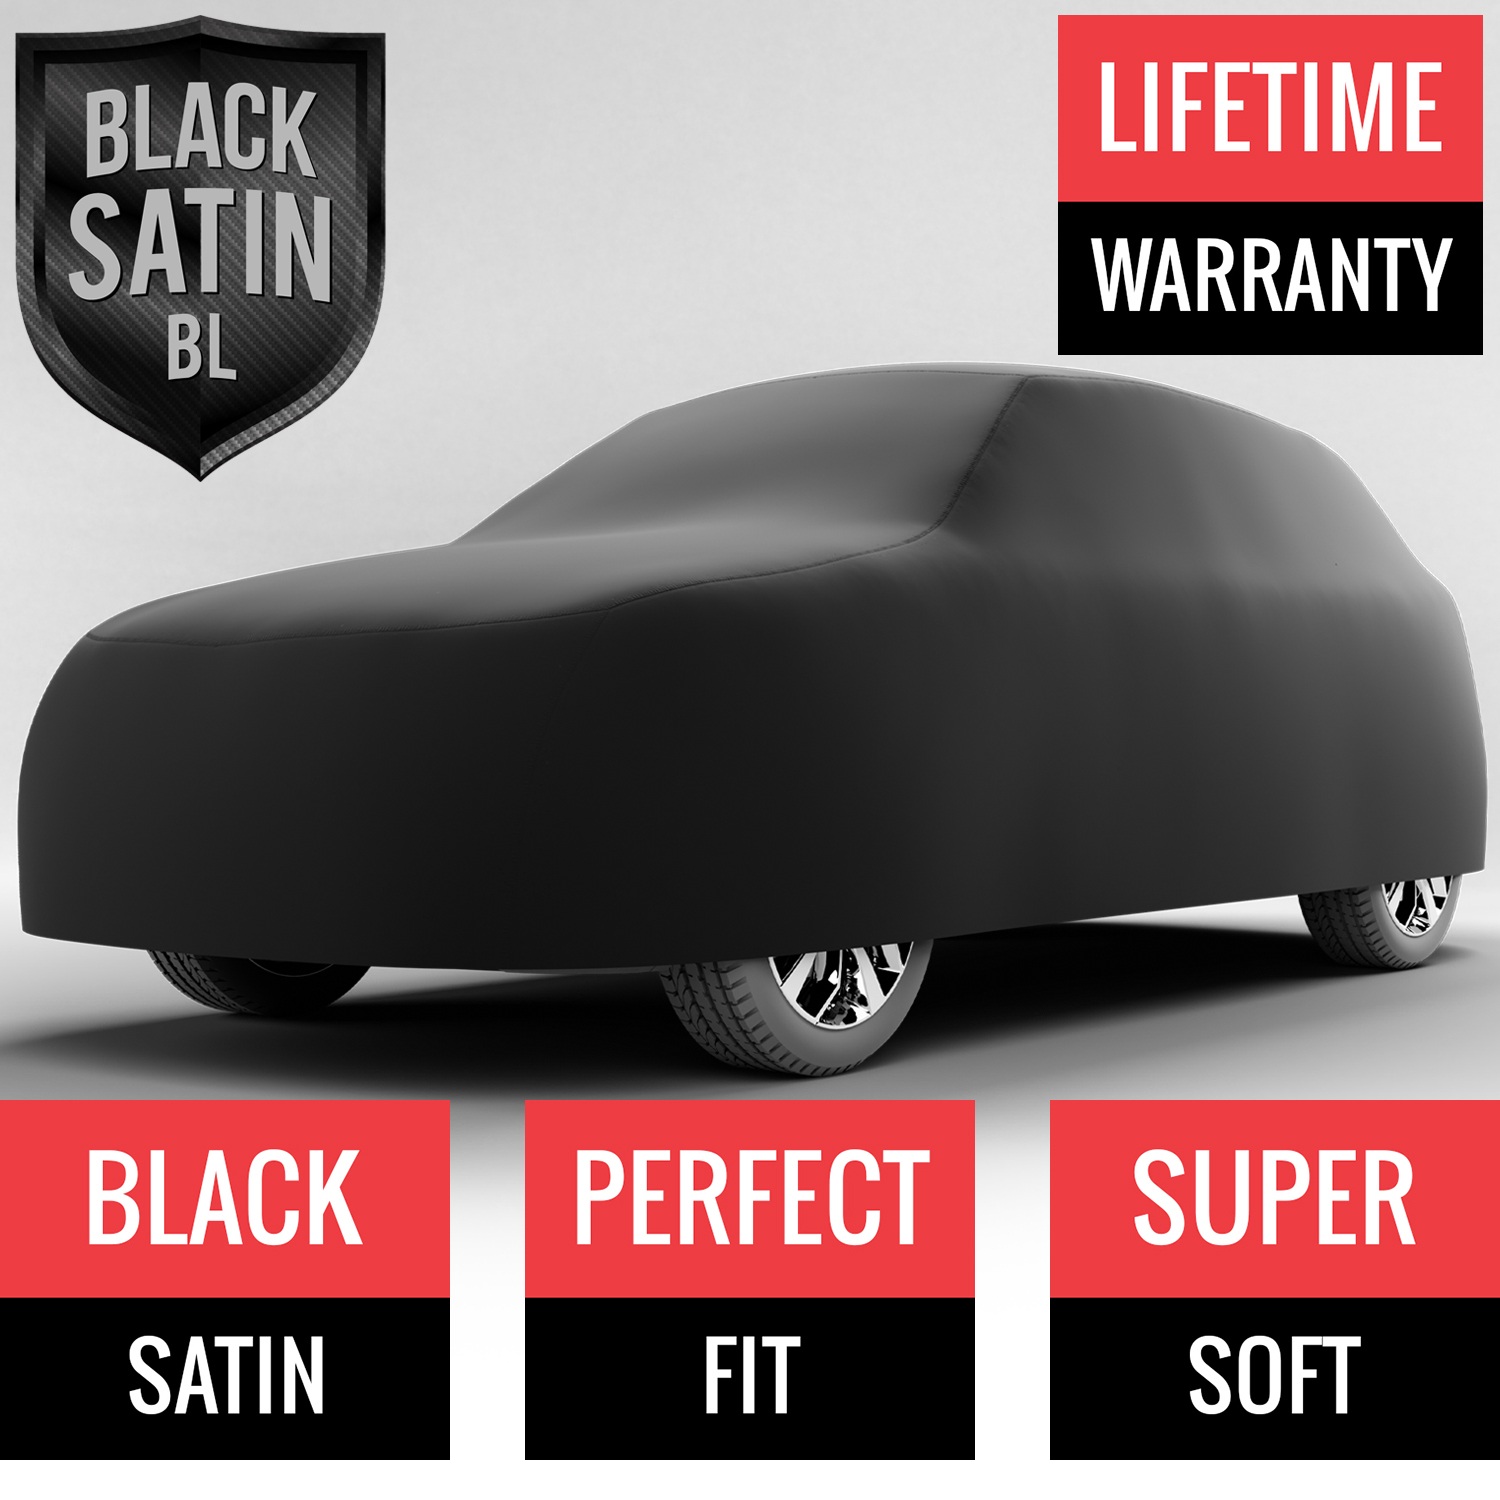 Black Satin BL - Black Car Cover for Plymouth Voyager 1999 Van